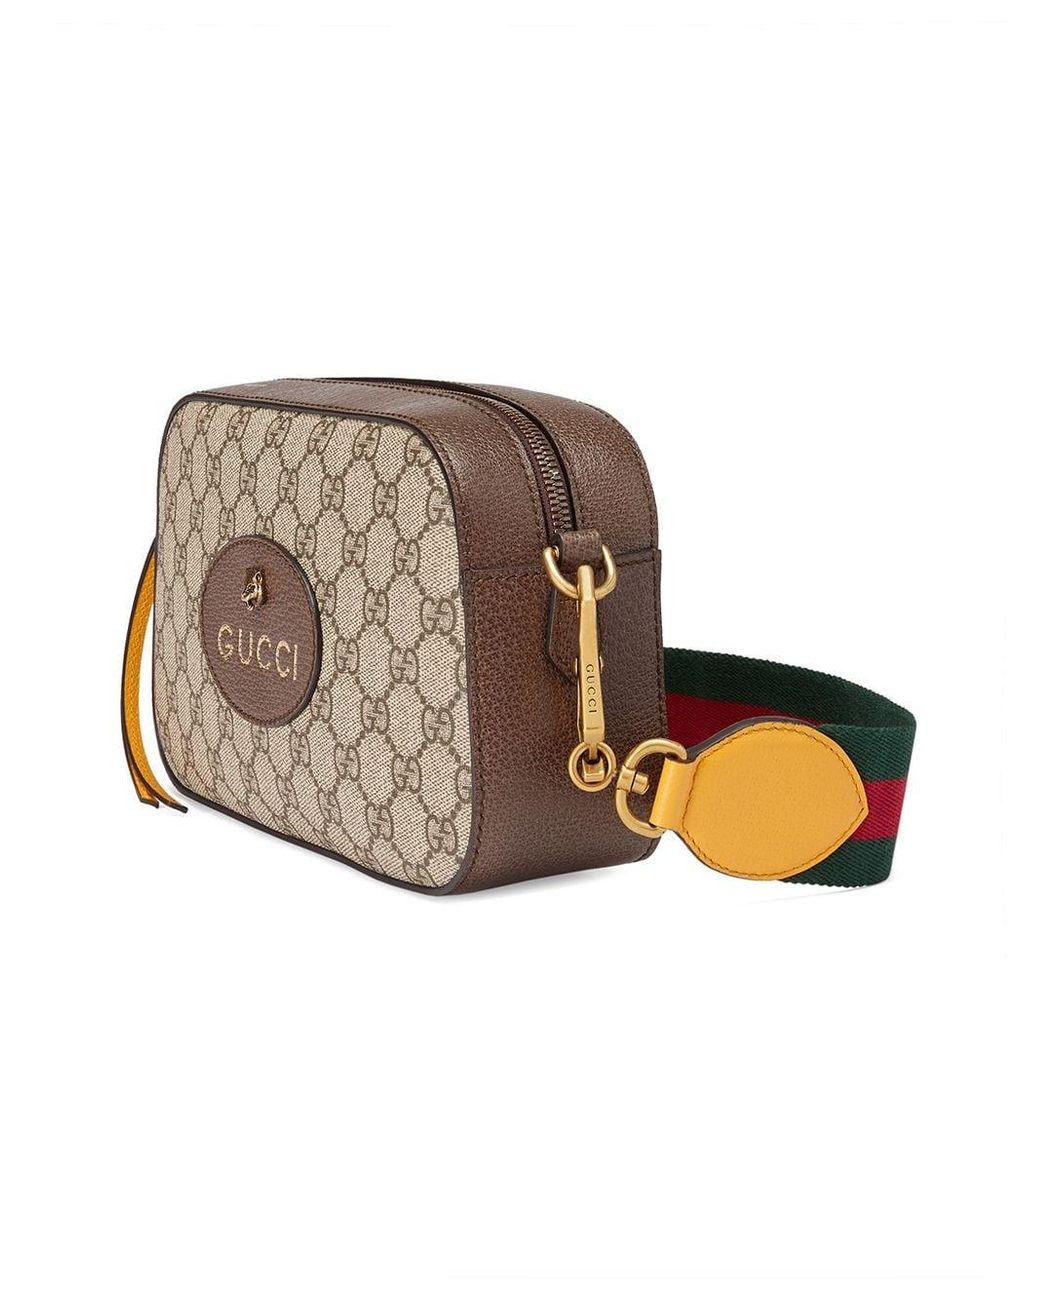 Gucci Canvas Neo Vintage GG Supreme Messenger Bag in Beige (Natural) - Lyst